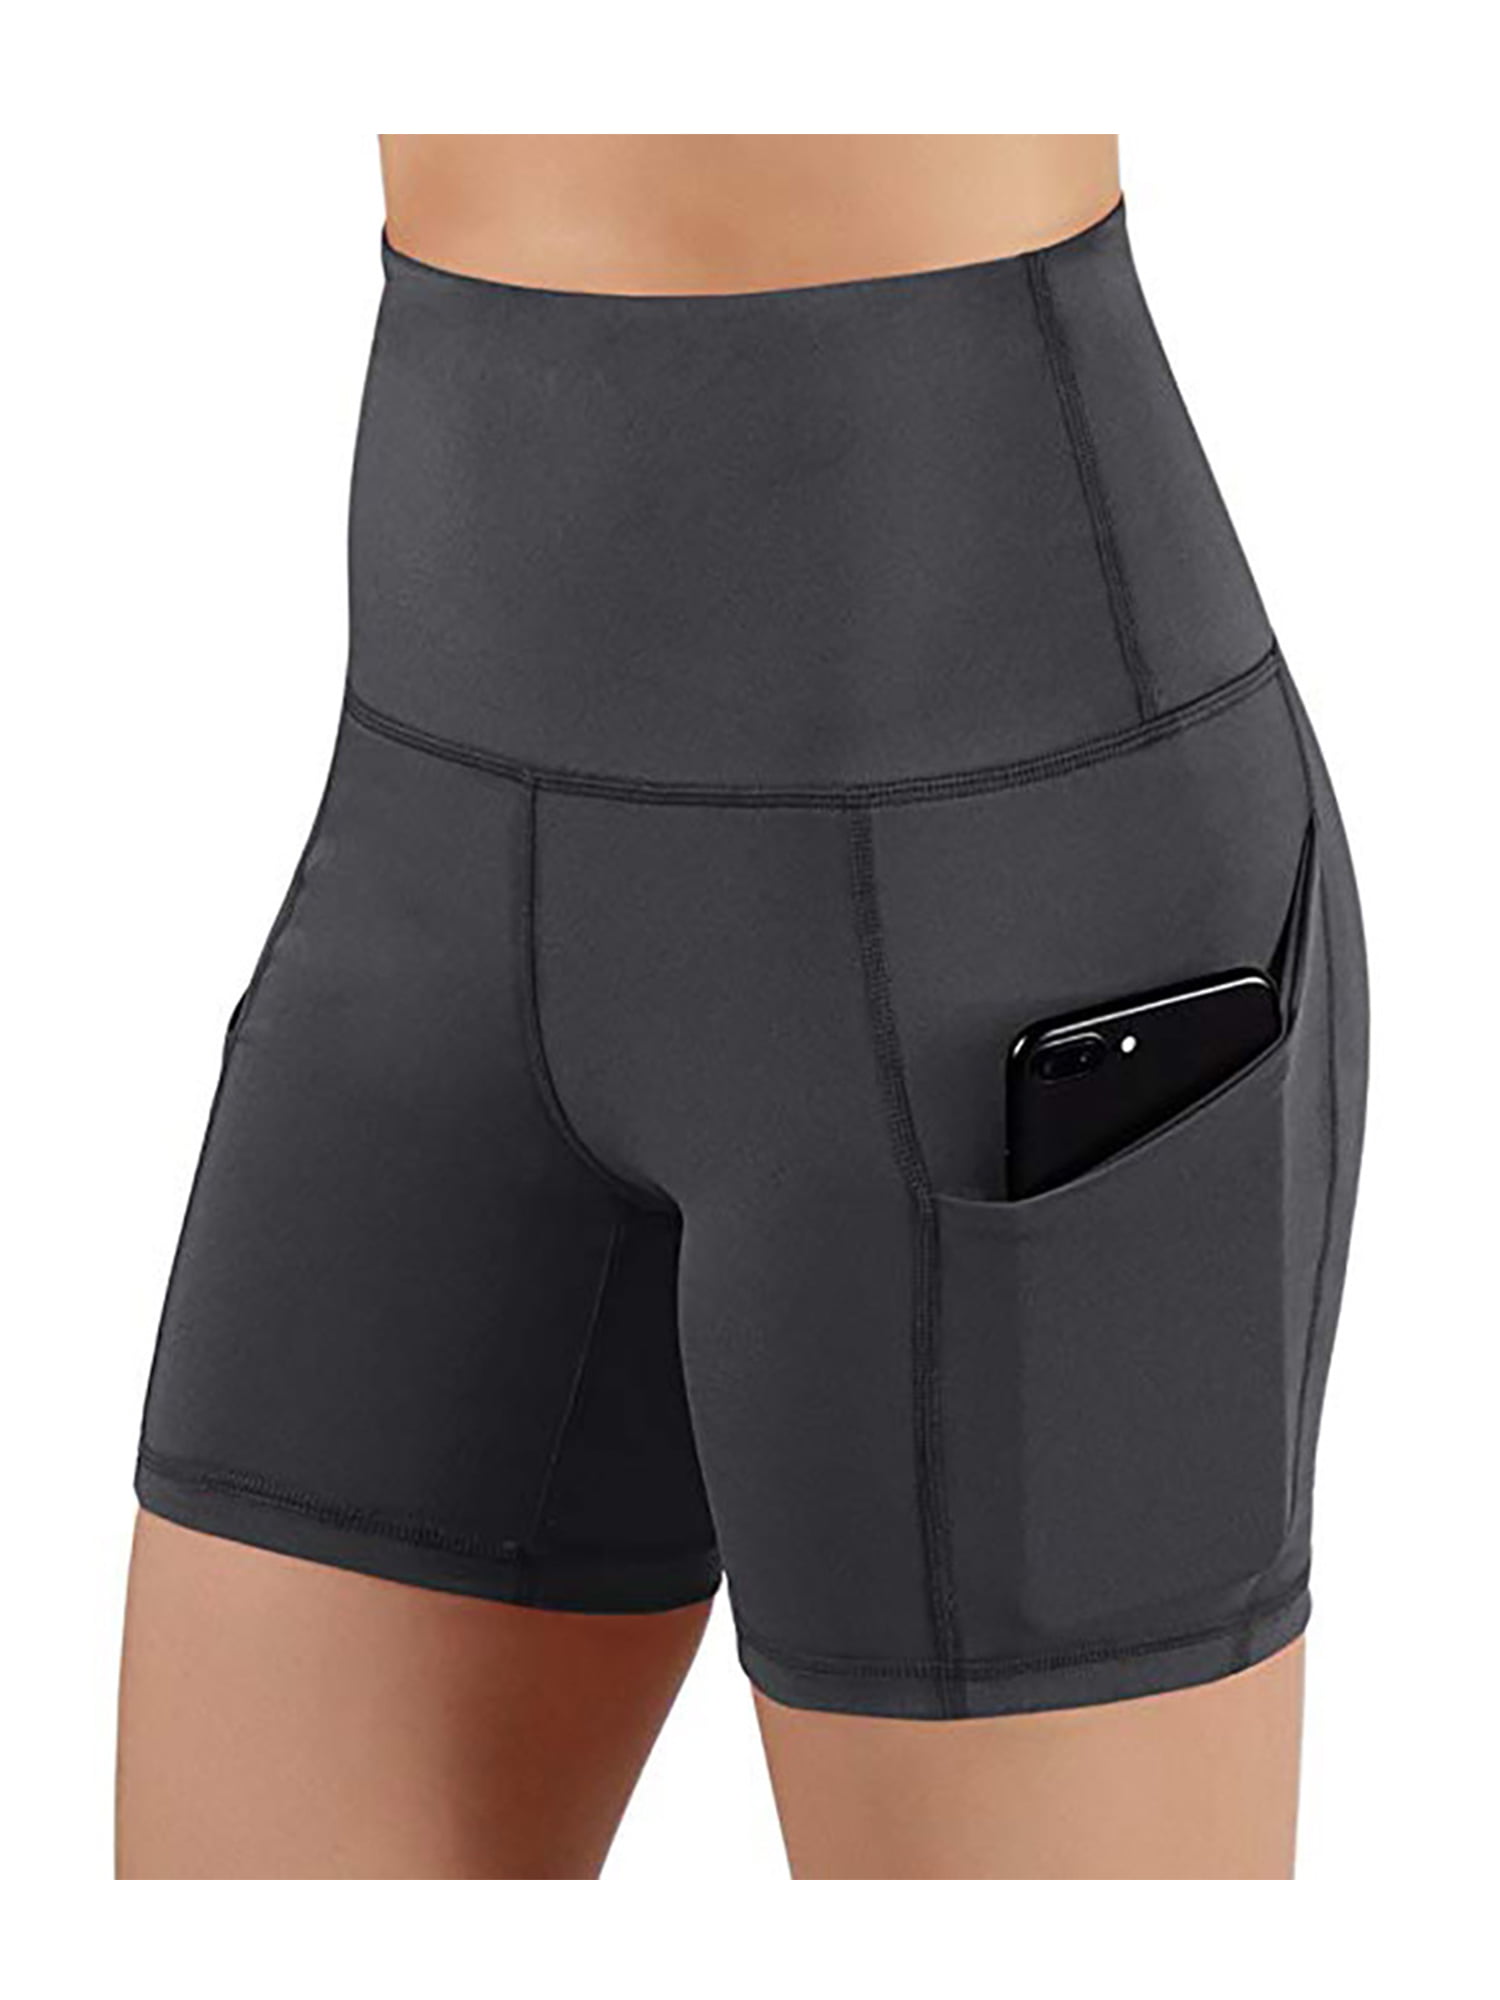 EKUPUZ Yoga Shorts for Women Fitness Sports Shorts with Pockets Tight-Fitting Quick-Drying High Waist Yoga Shorts 